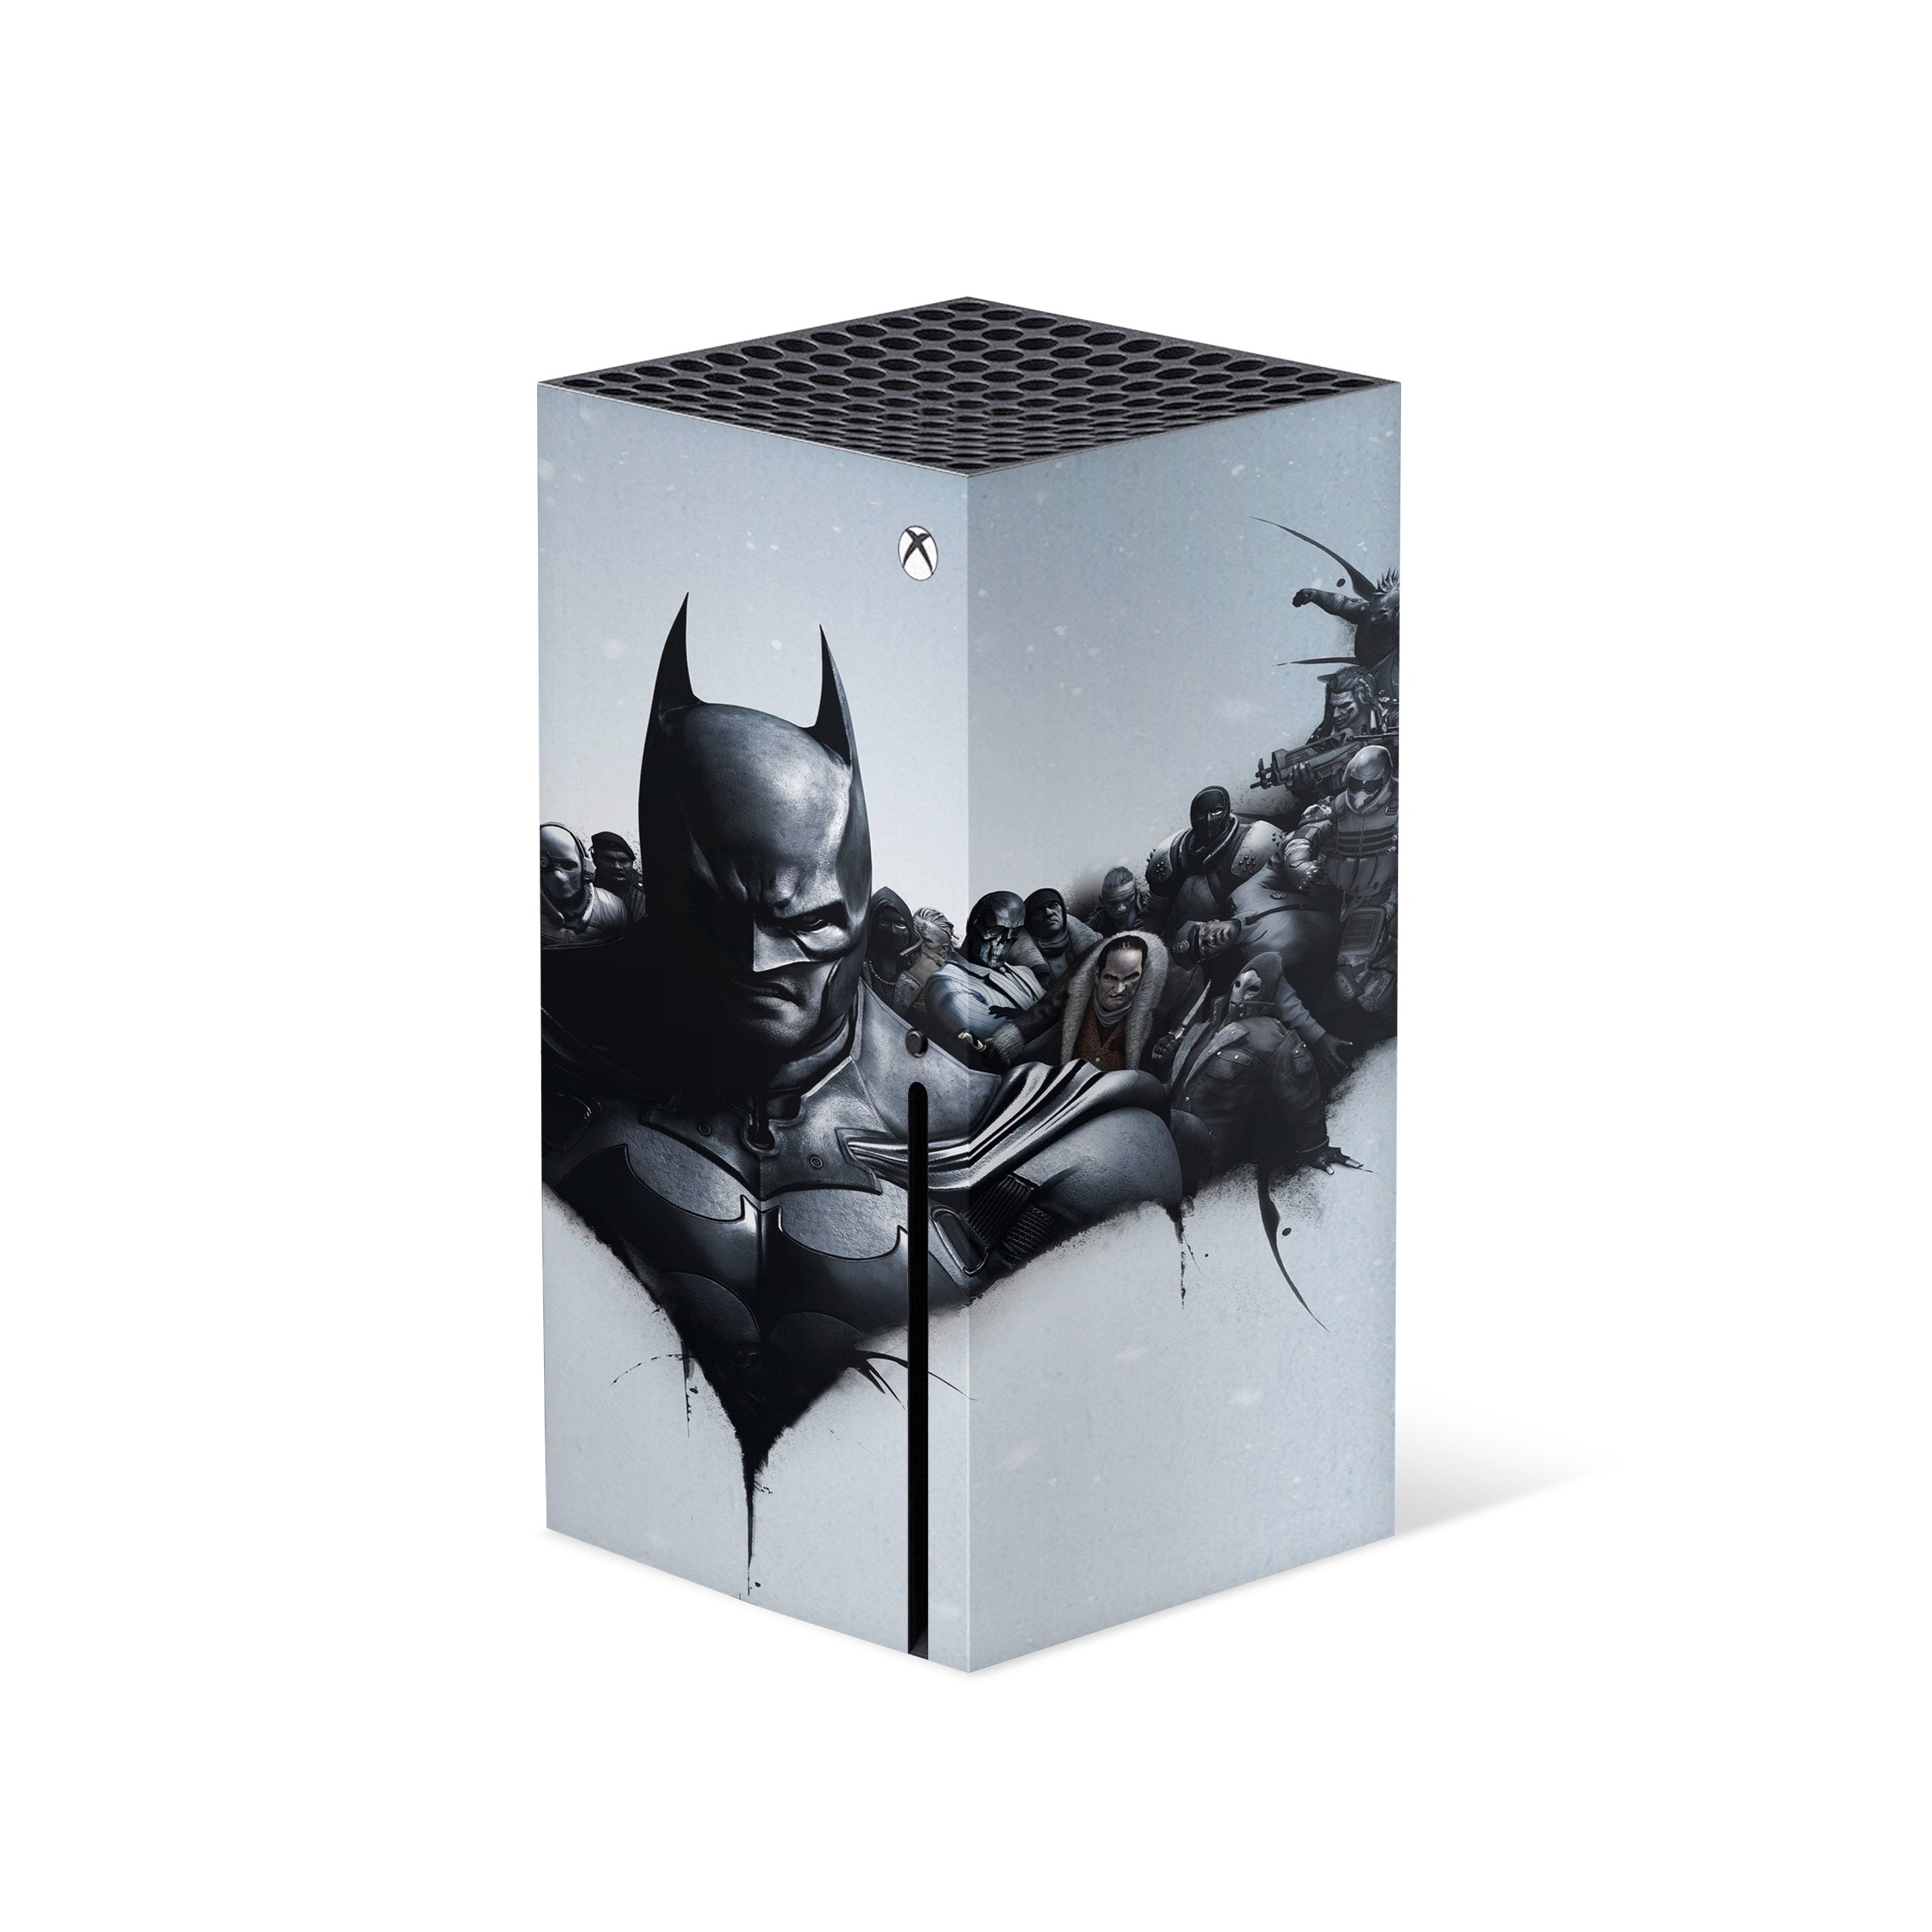 A video game skin featuring a DC Batman design for the Xbox Series X.